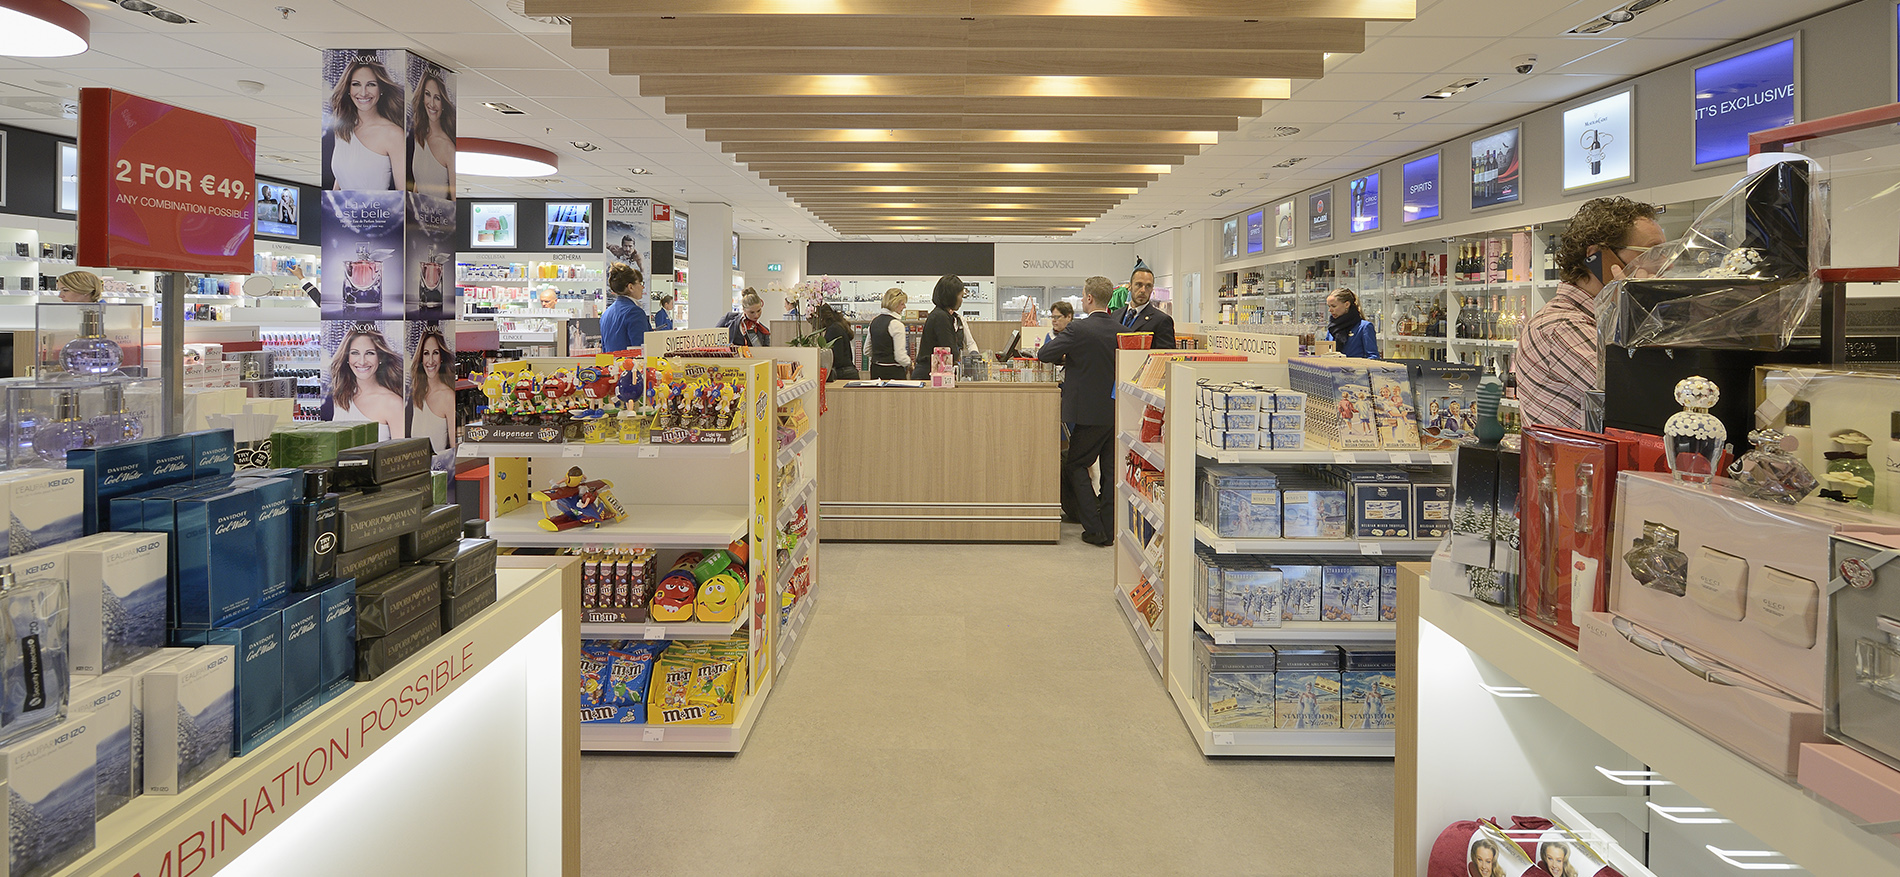 B&S Crew Shop – Winkelinrichting Luchthaven Schiphol - Retail design